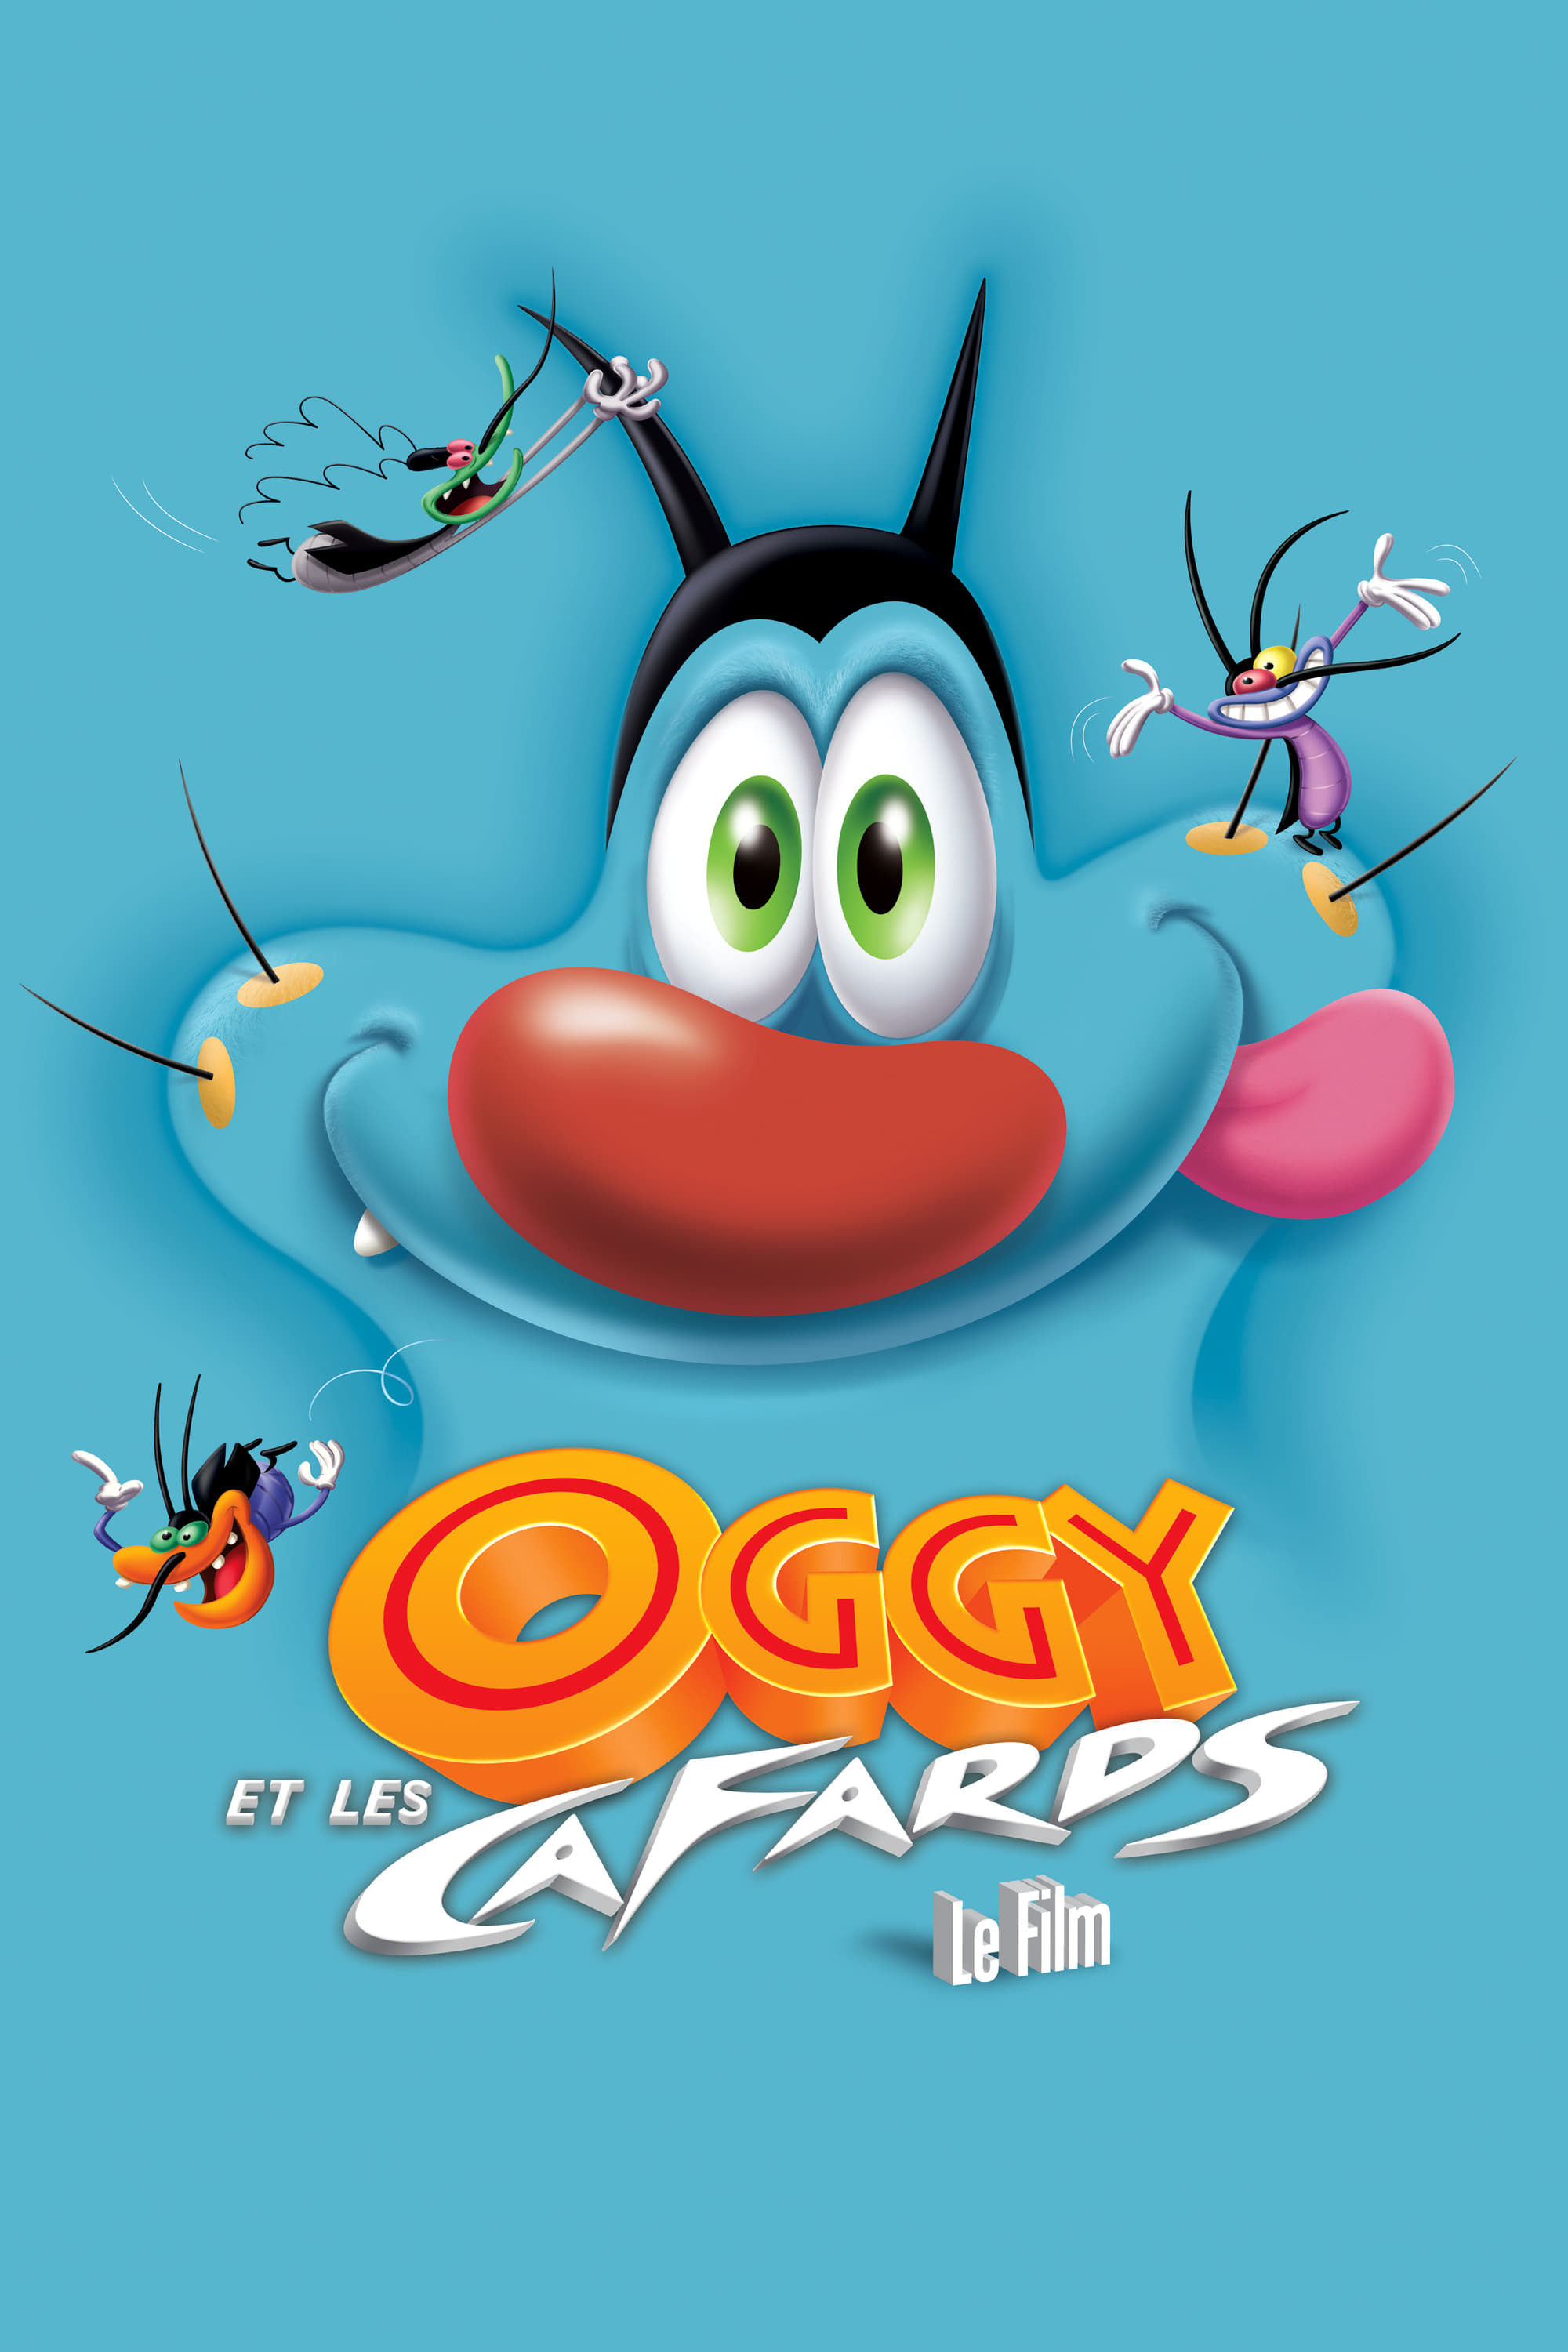 Mèo Oggy Và Những Chú Gián Tinh Nghịch (Oggy and the Cockroaches: The Movie) [2013]